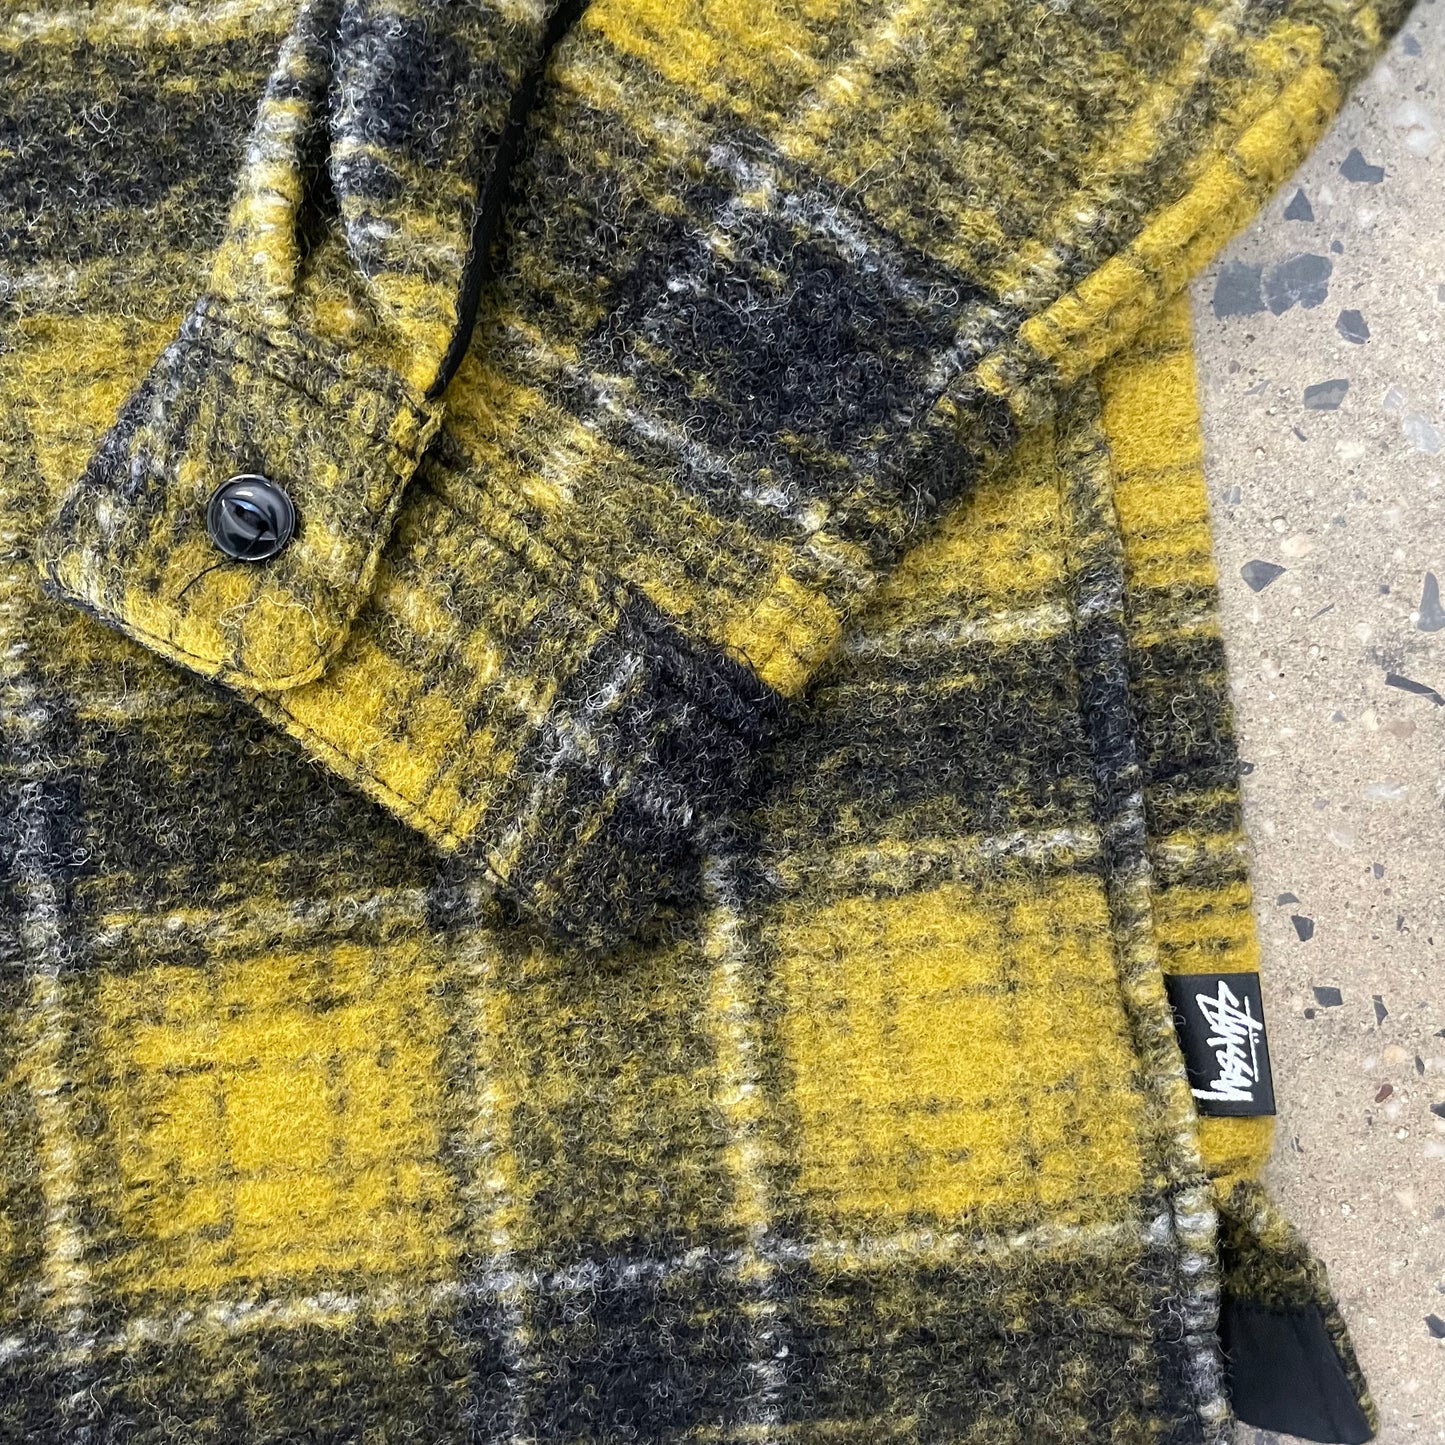 Stussy Wool Plaid Zip Shirt - Yellow